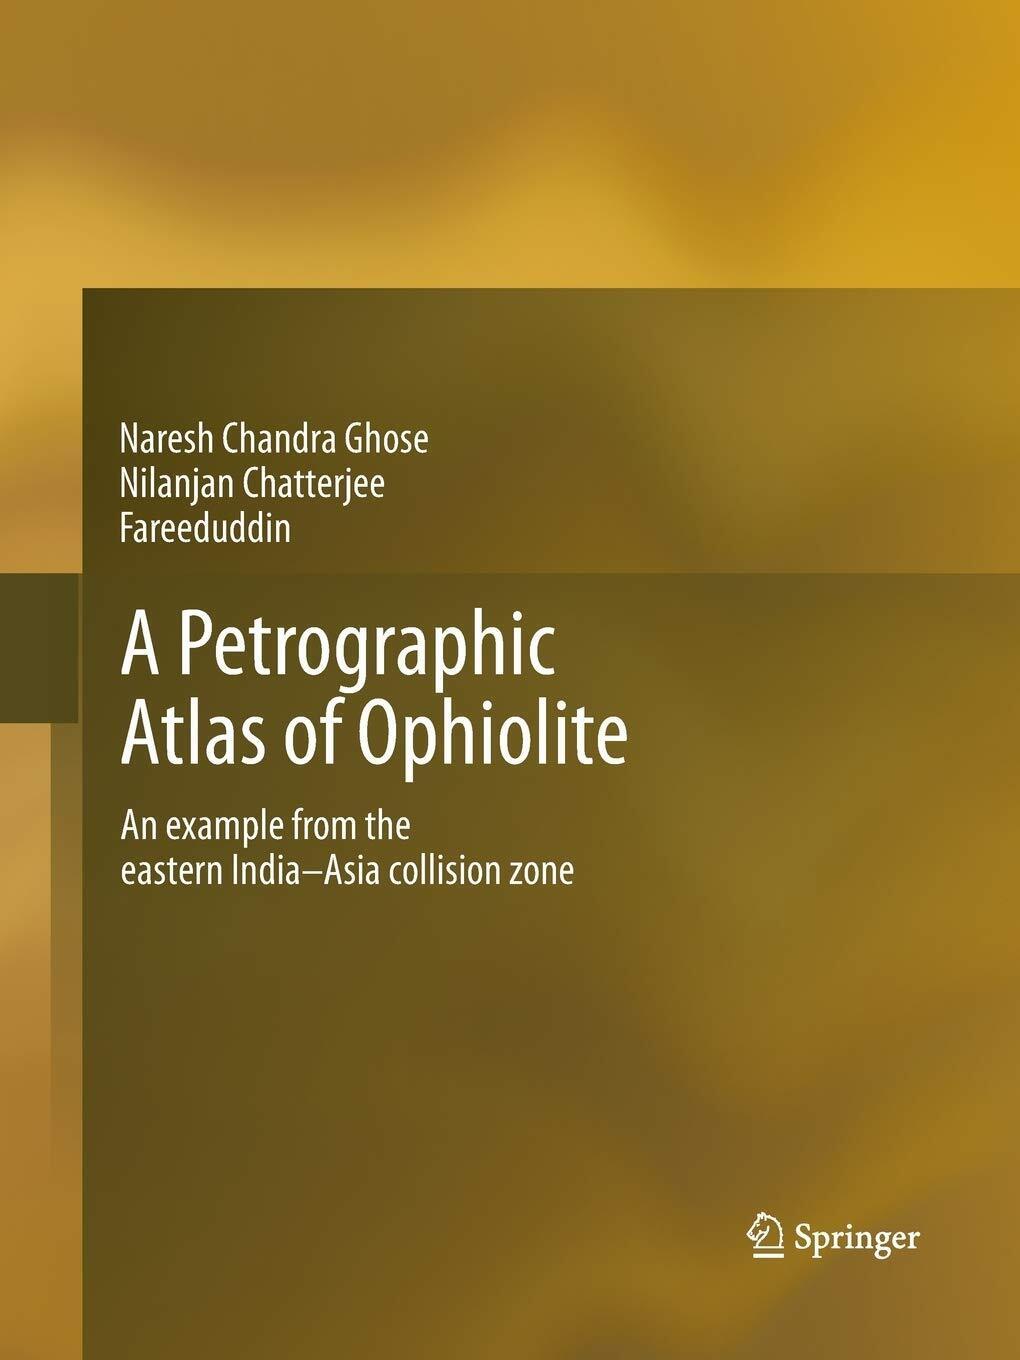 A Petrographic Atlas of Ophiolite - Springer, 2016 libro usato